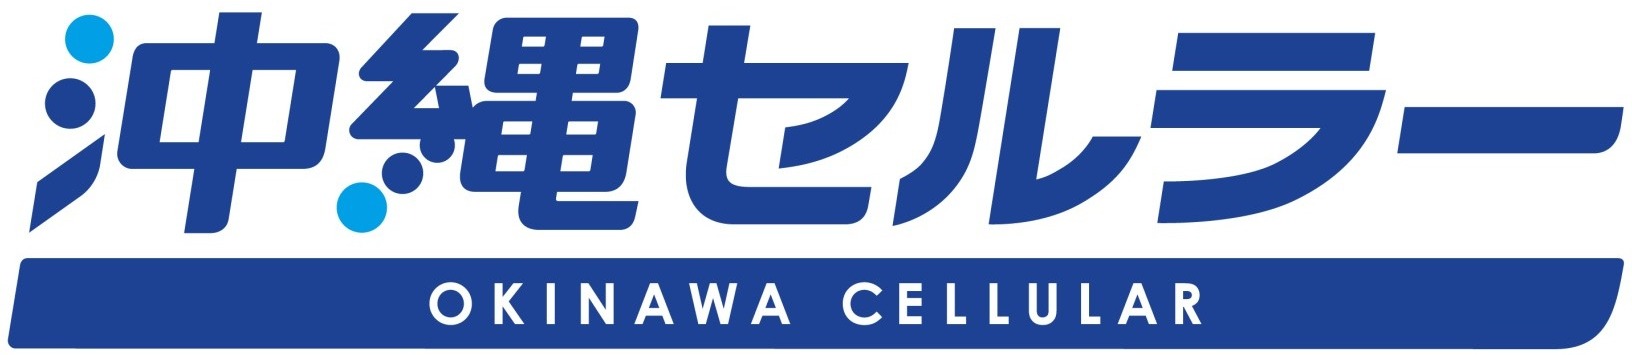 Okinawa Cellular Telephone Company